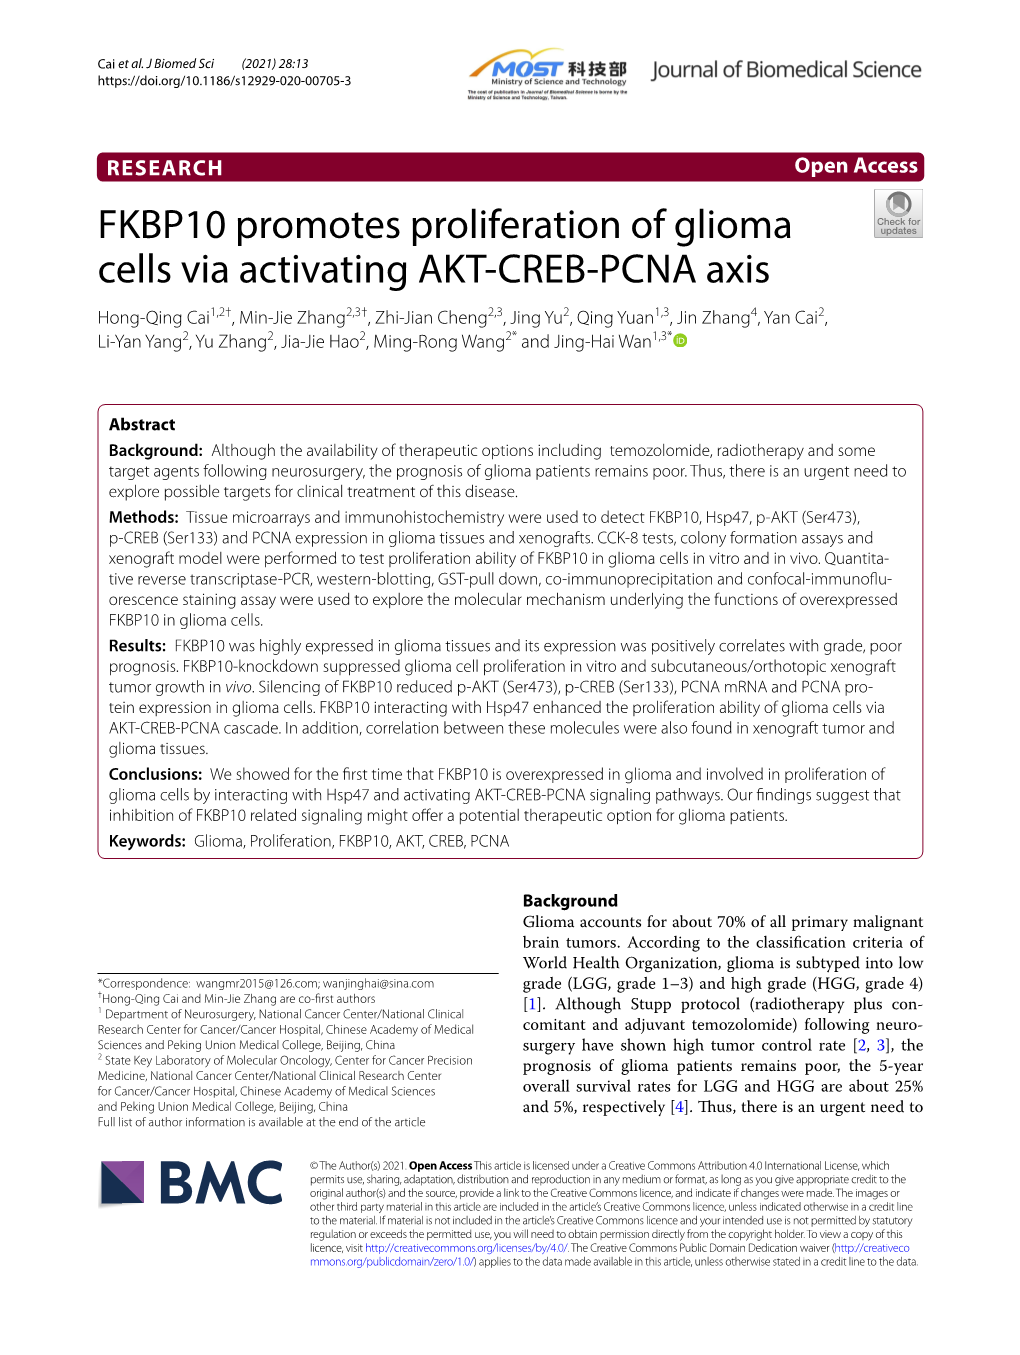 FKBP10 Promotes Proliferation of Glioma Cells Via Activating AKT